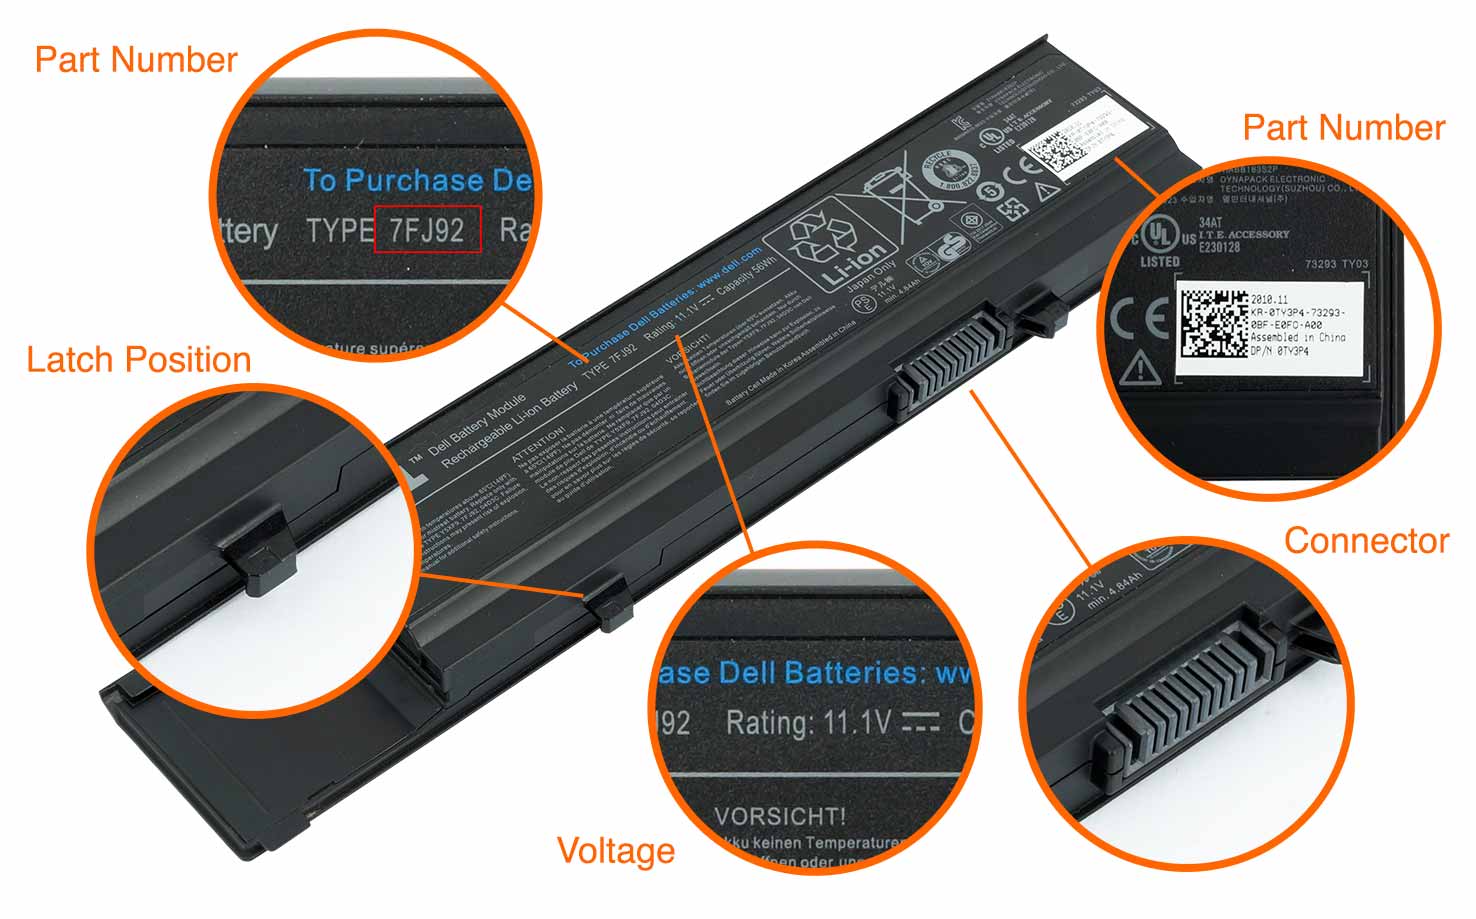 Dell 6GTPY LDE337 4912mAh / 56Wh Notebook Battery - BattDepot Canada